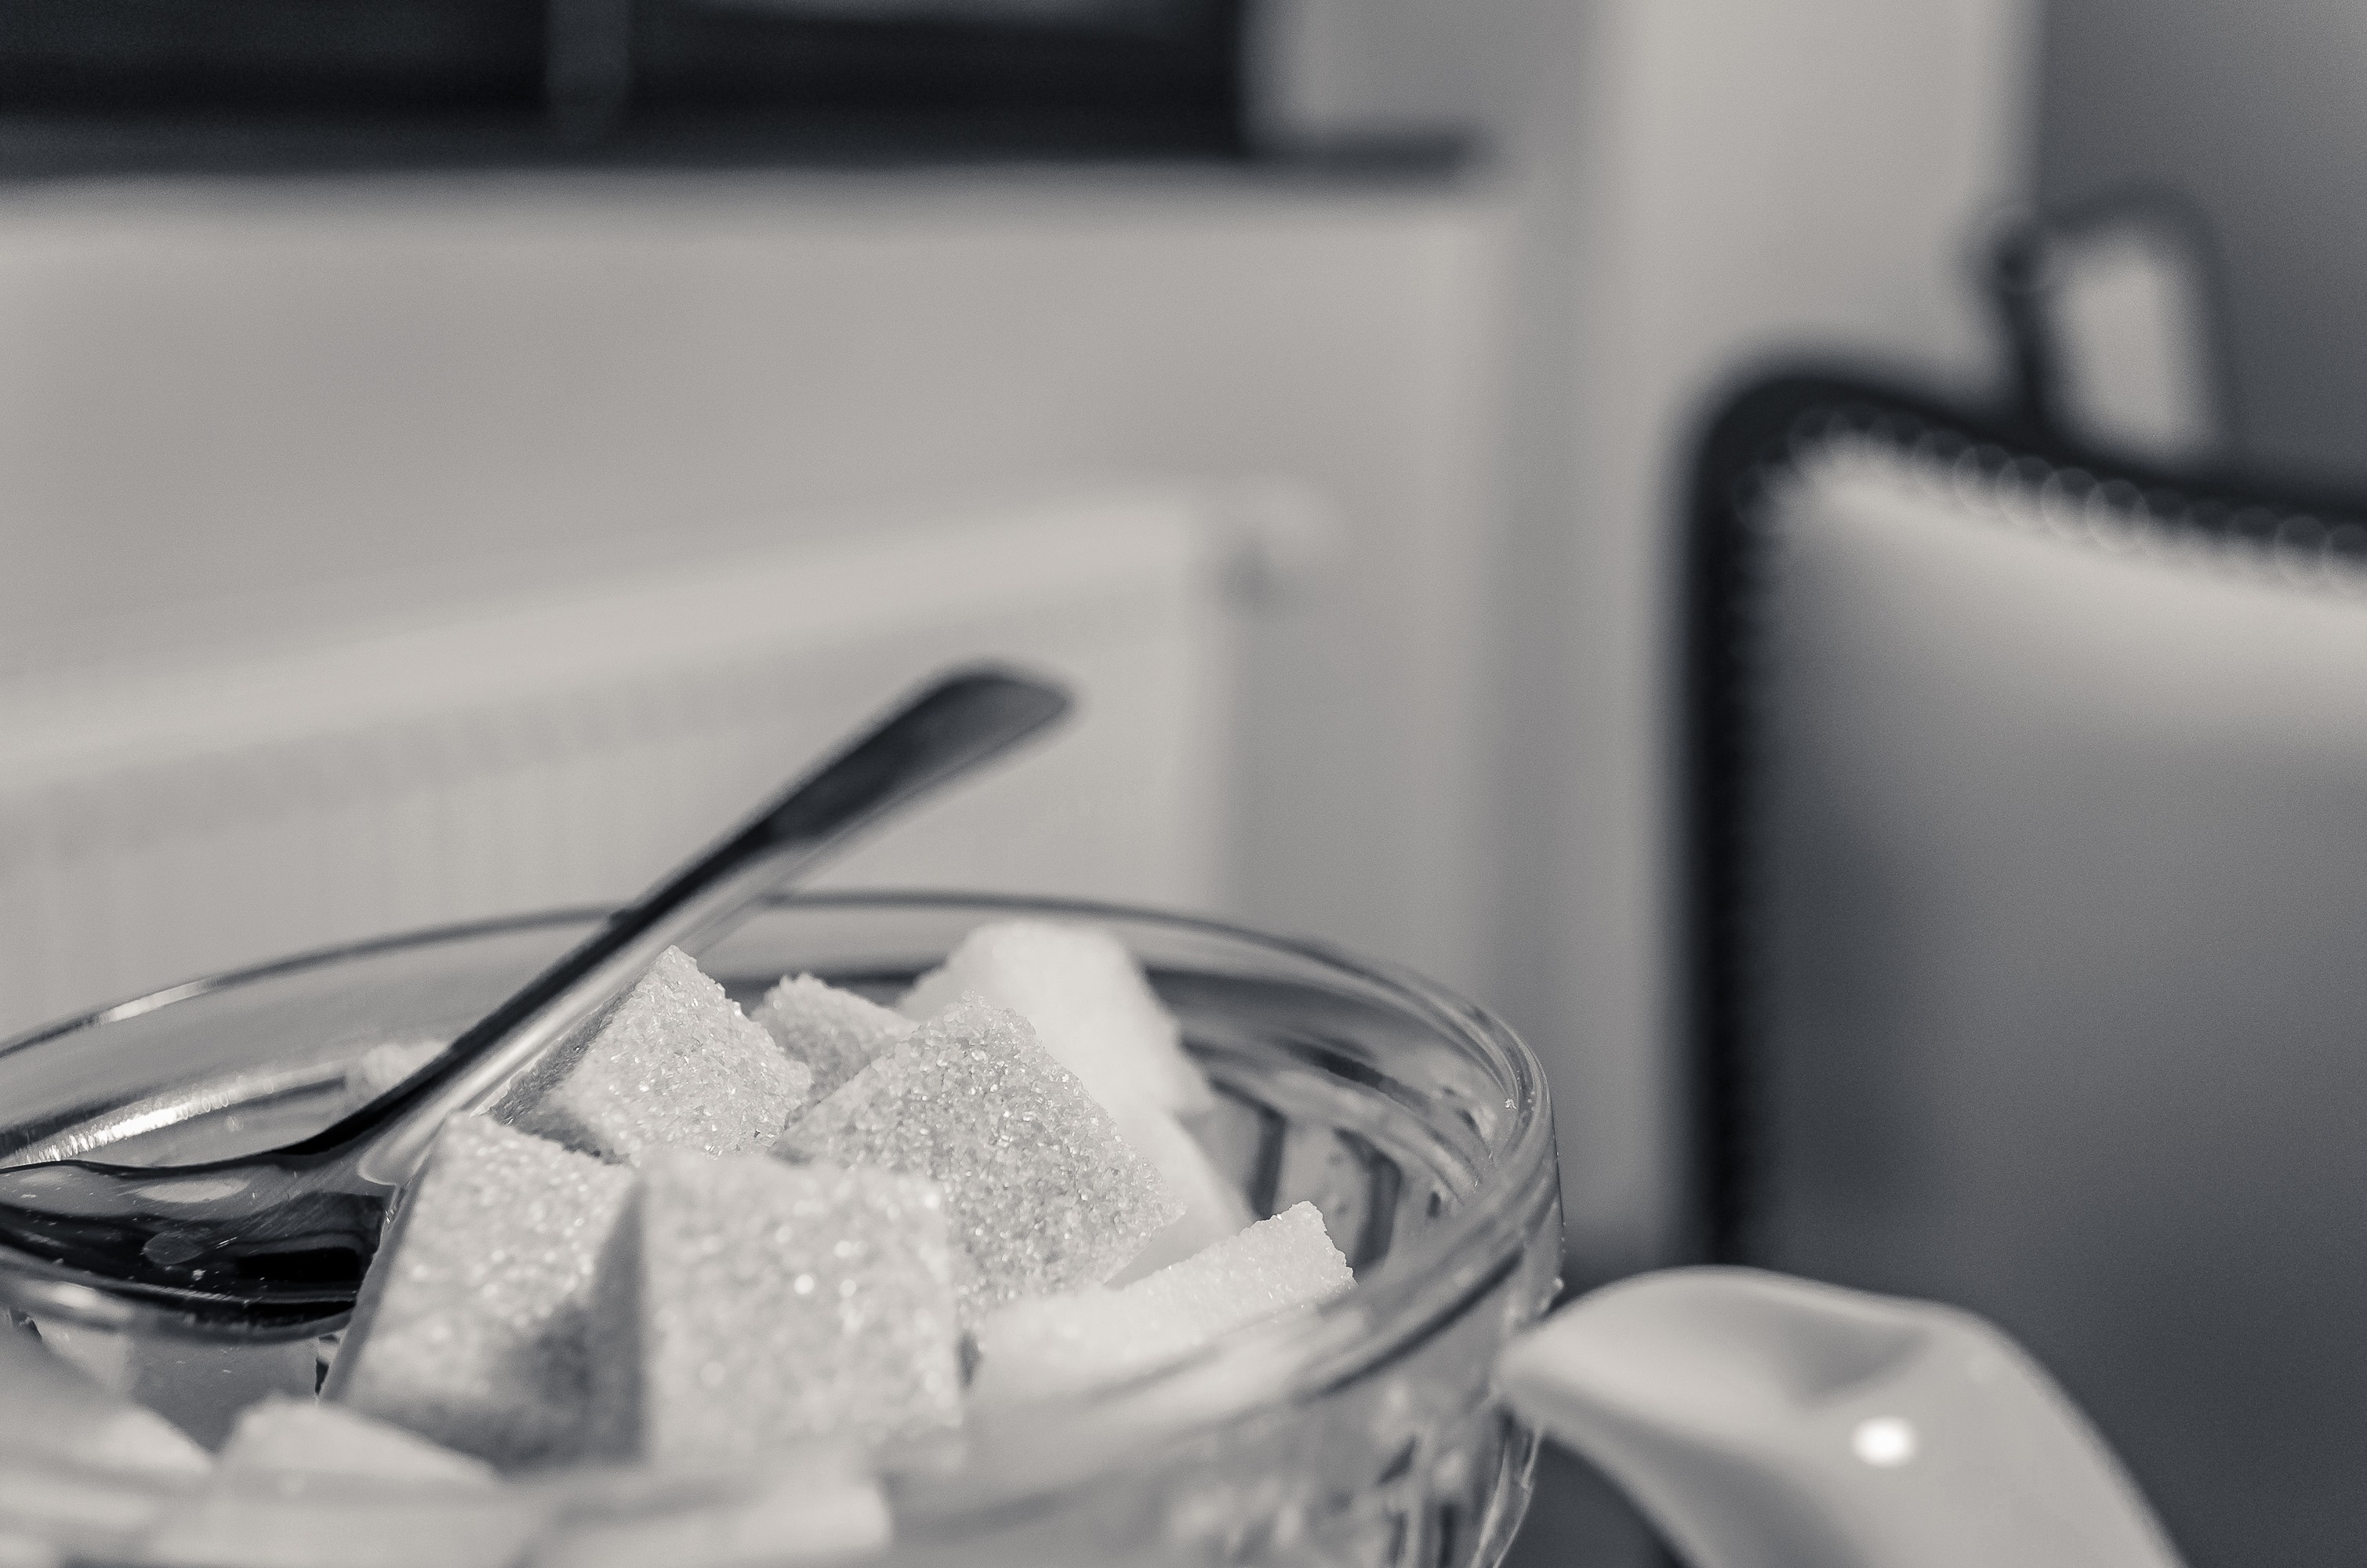 12 кг сахара. Сахар. Сахар 1920 1080. Стол с сахаром фон. Сахар кусочки на столе.